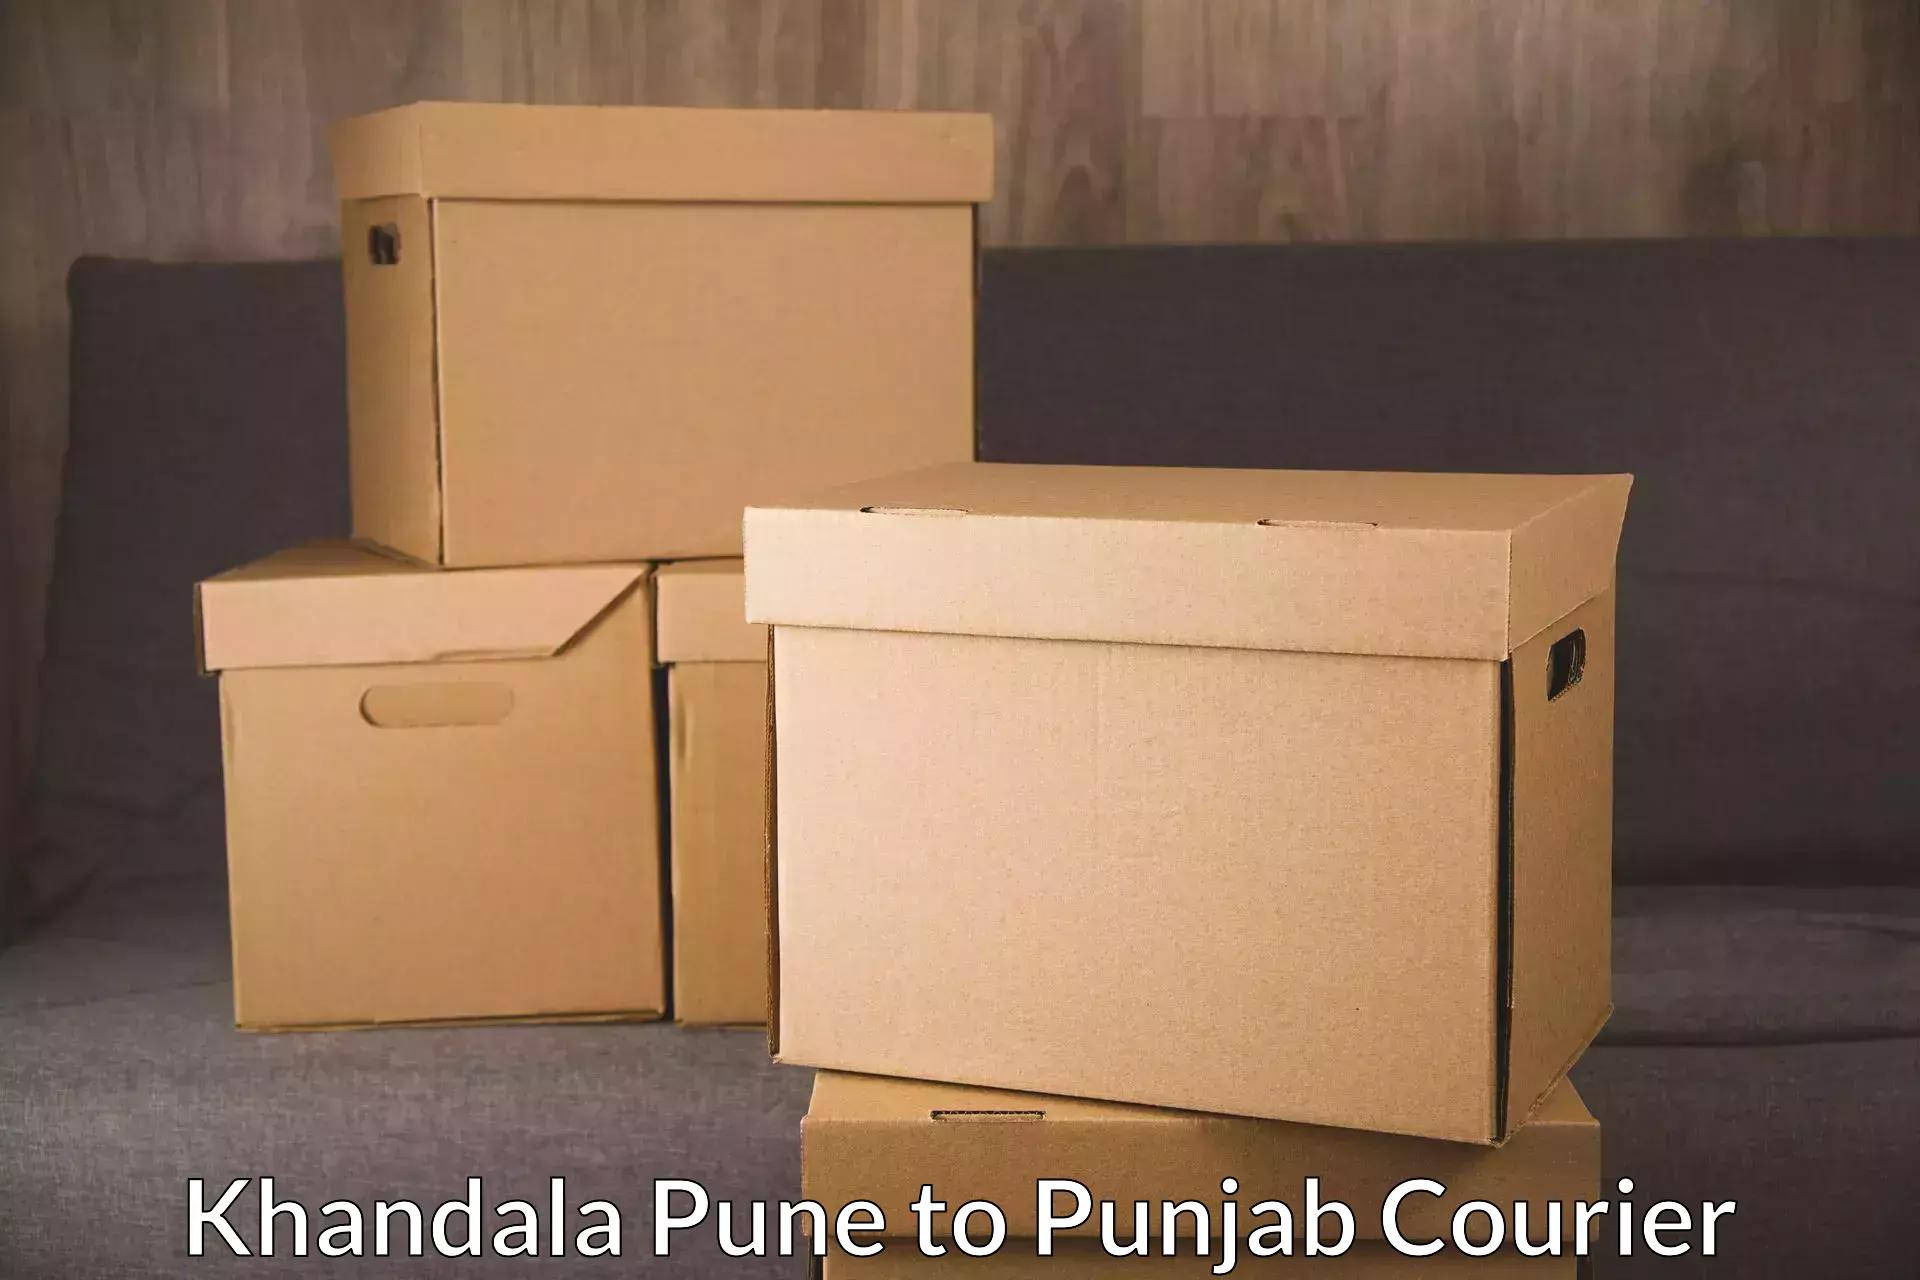 Courier service innovation Khandala Pune to Zira